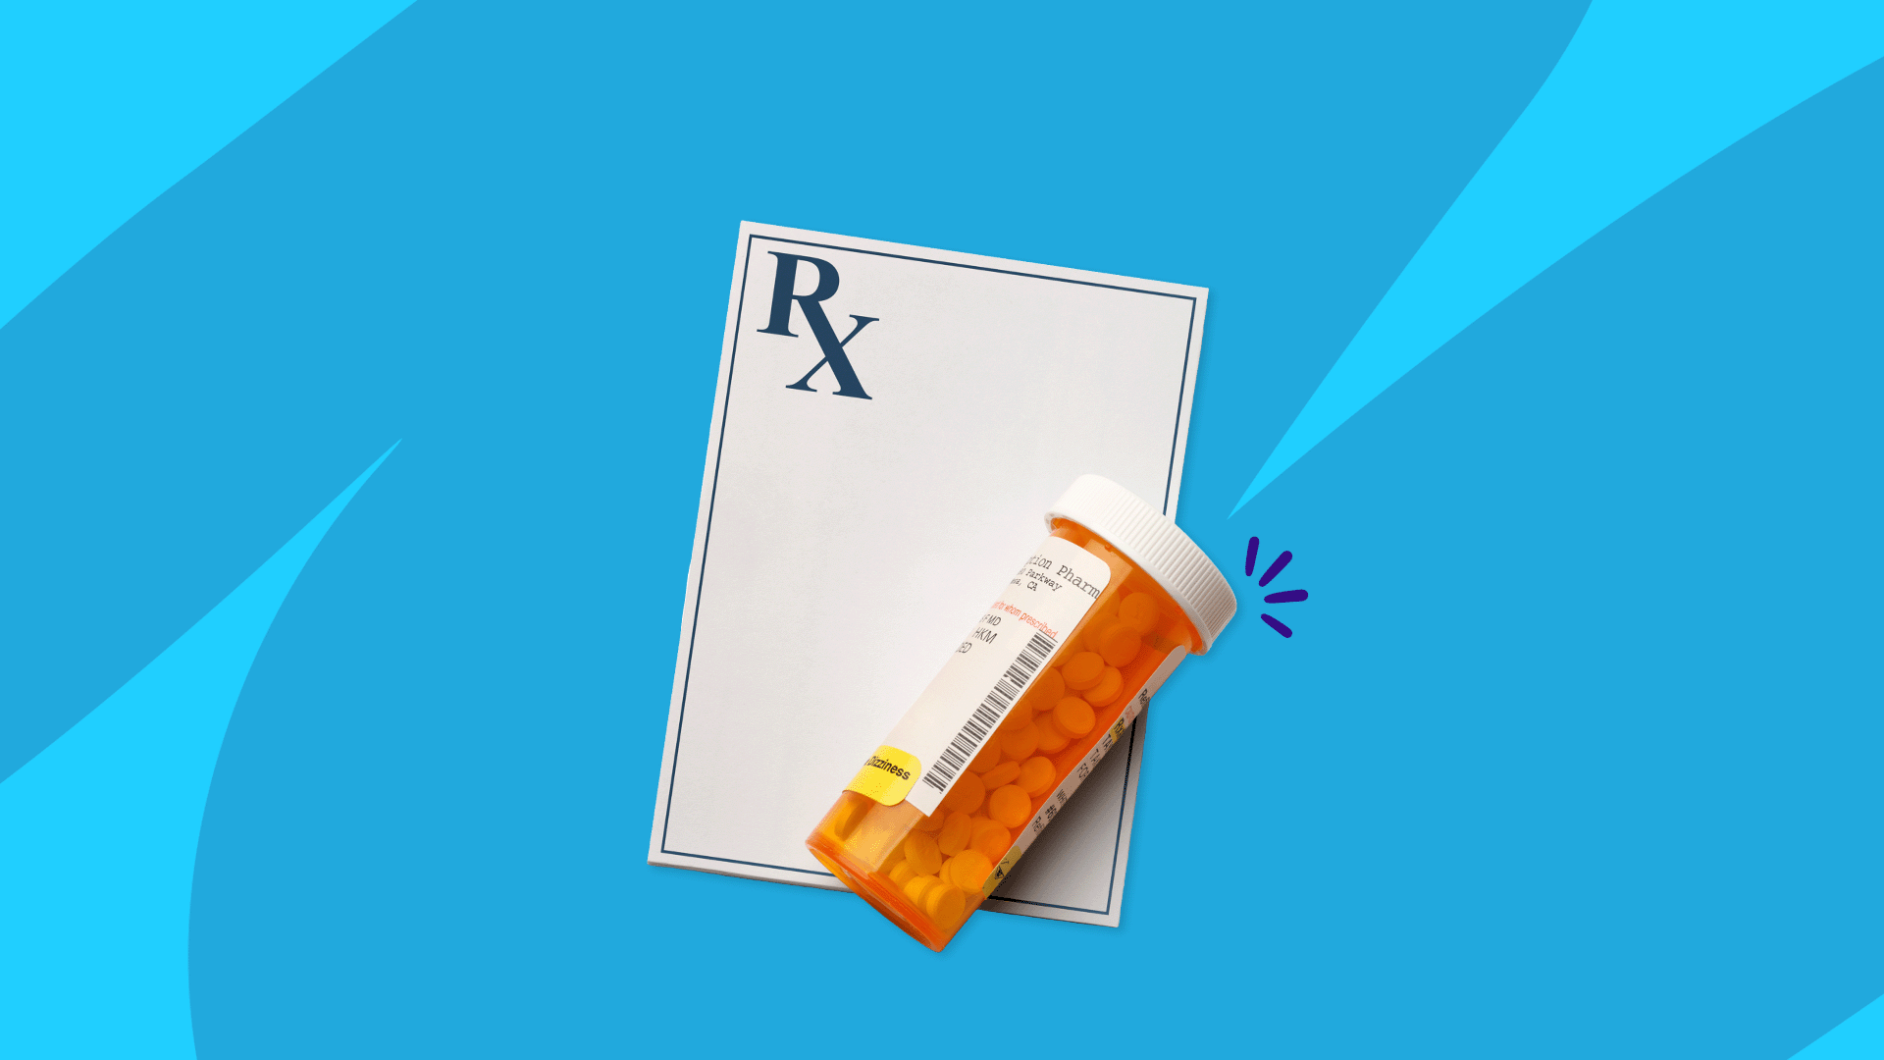 Rx pill bottle and prescription pad: Propranolol interactions